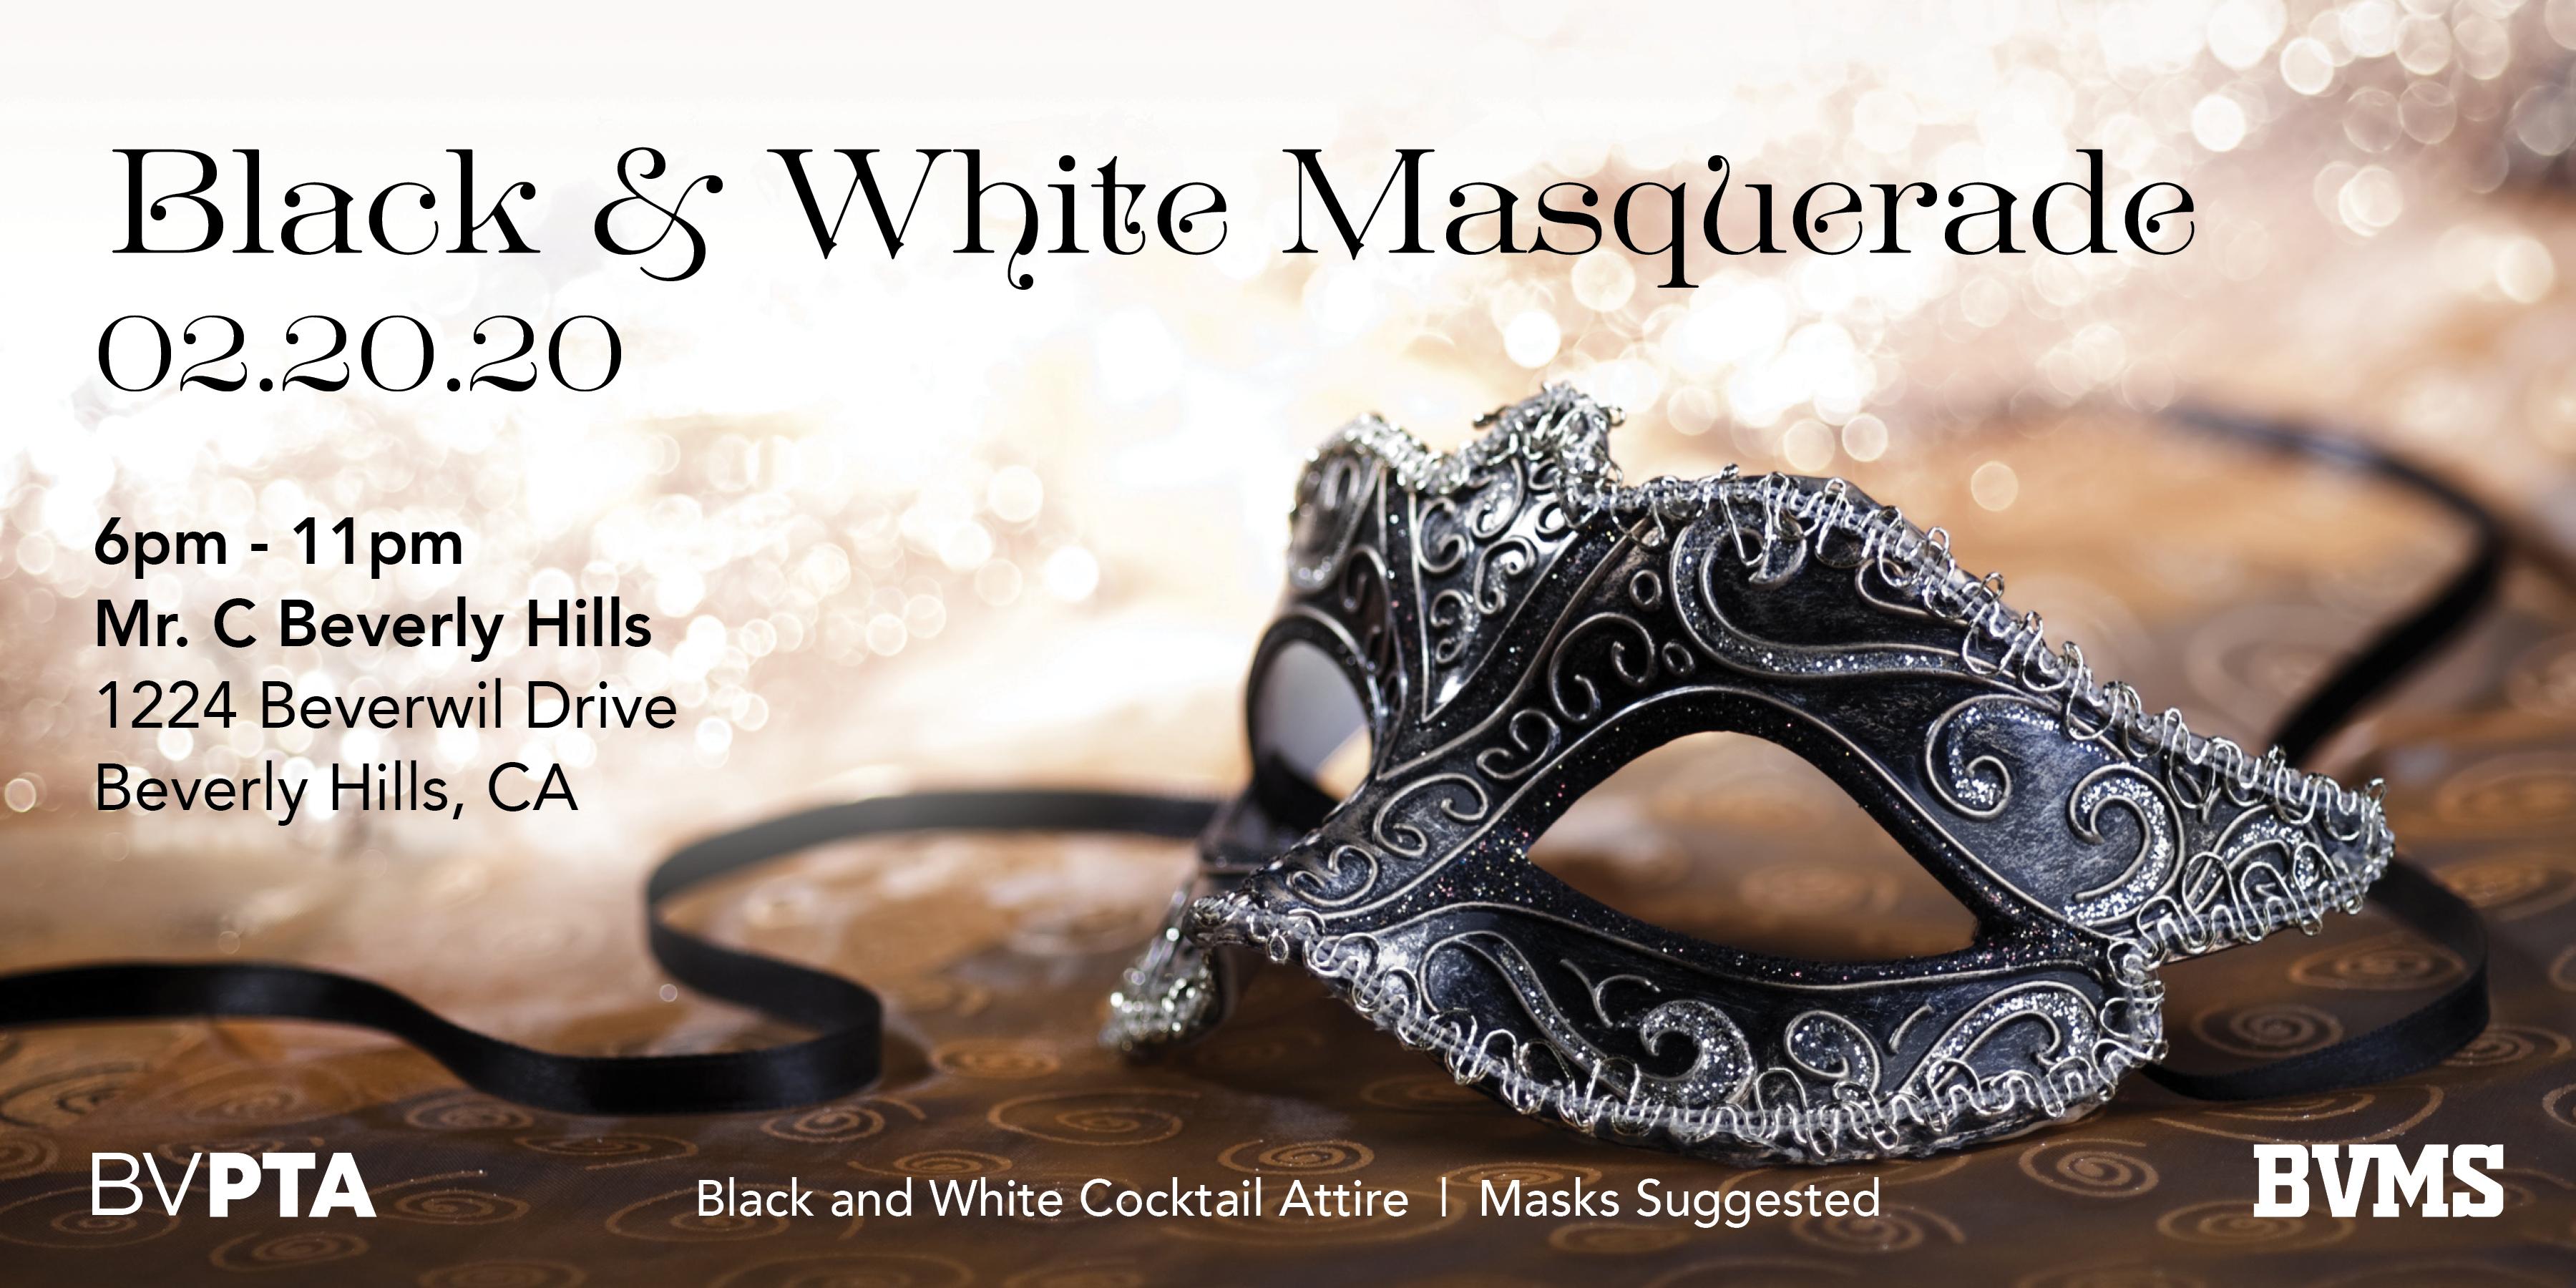 Beverly Vista's Black & White Masquerade